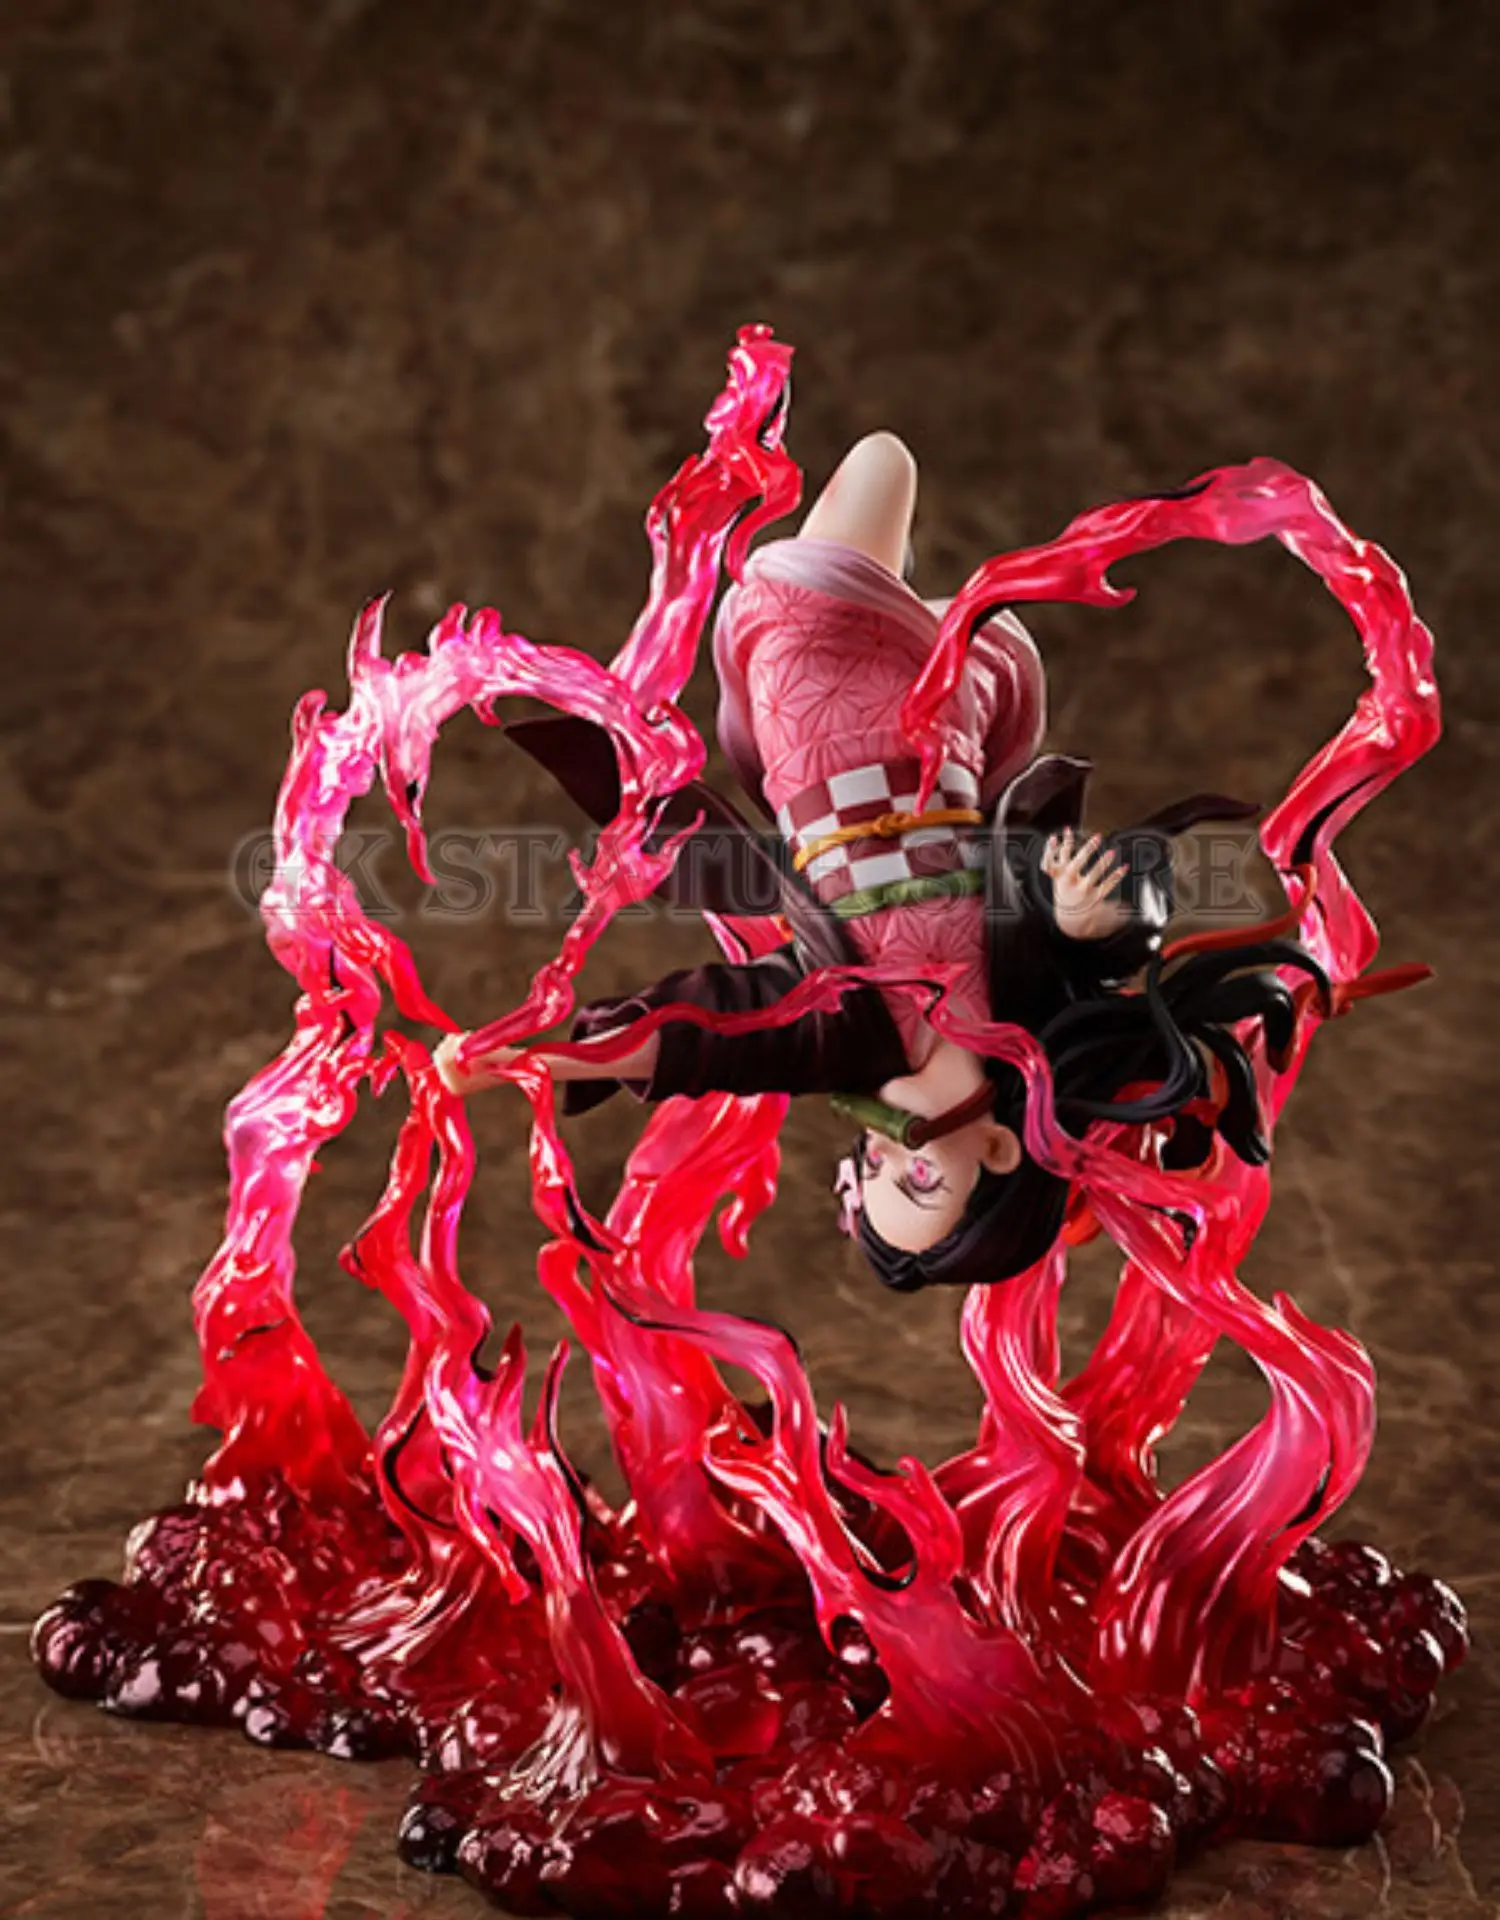 

Demon Slayer Kamado Nezuko Aniplex studio GK Original Product statue Anime model Toy Gift for kid